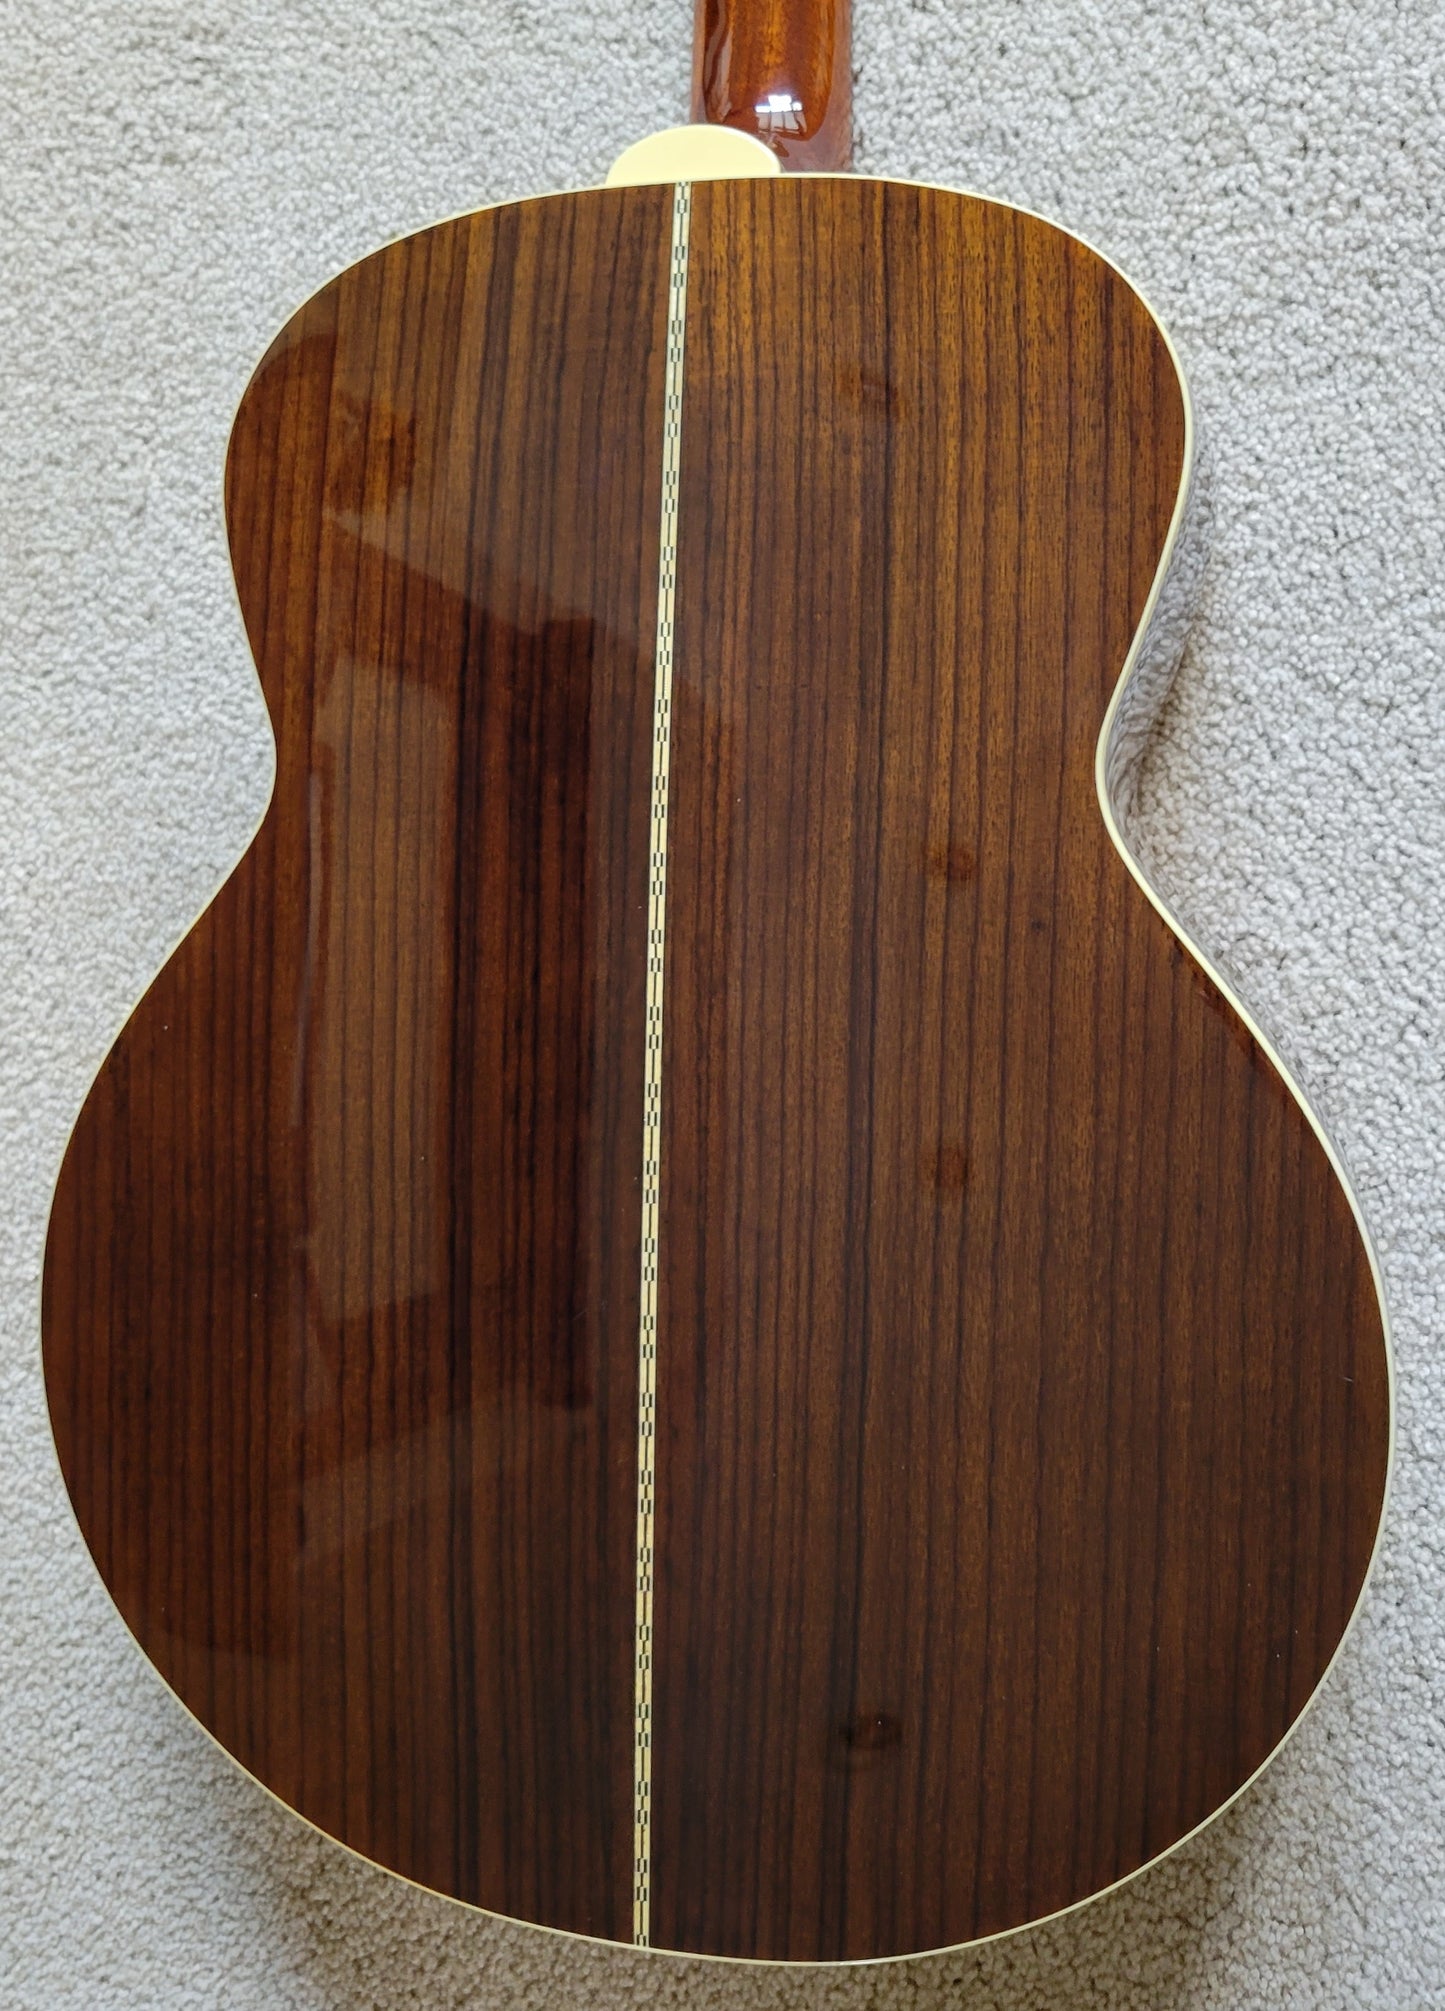 Guild F-1512E 12 String Acoustic Electric Guitar, Guild Rigid Case Included